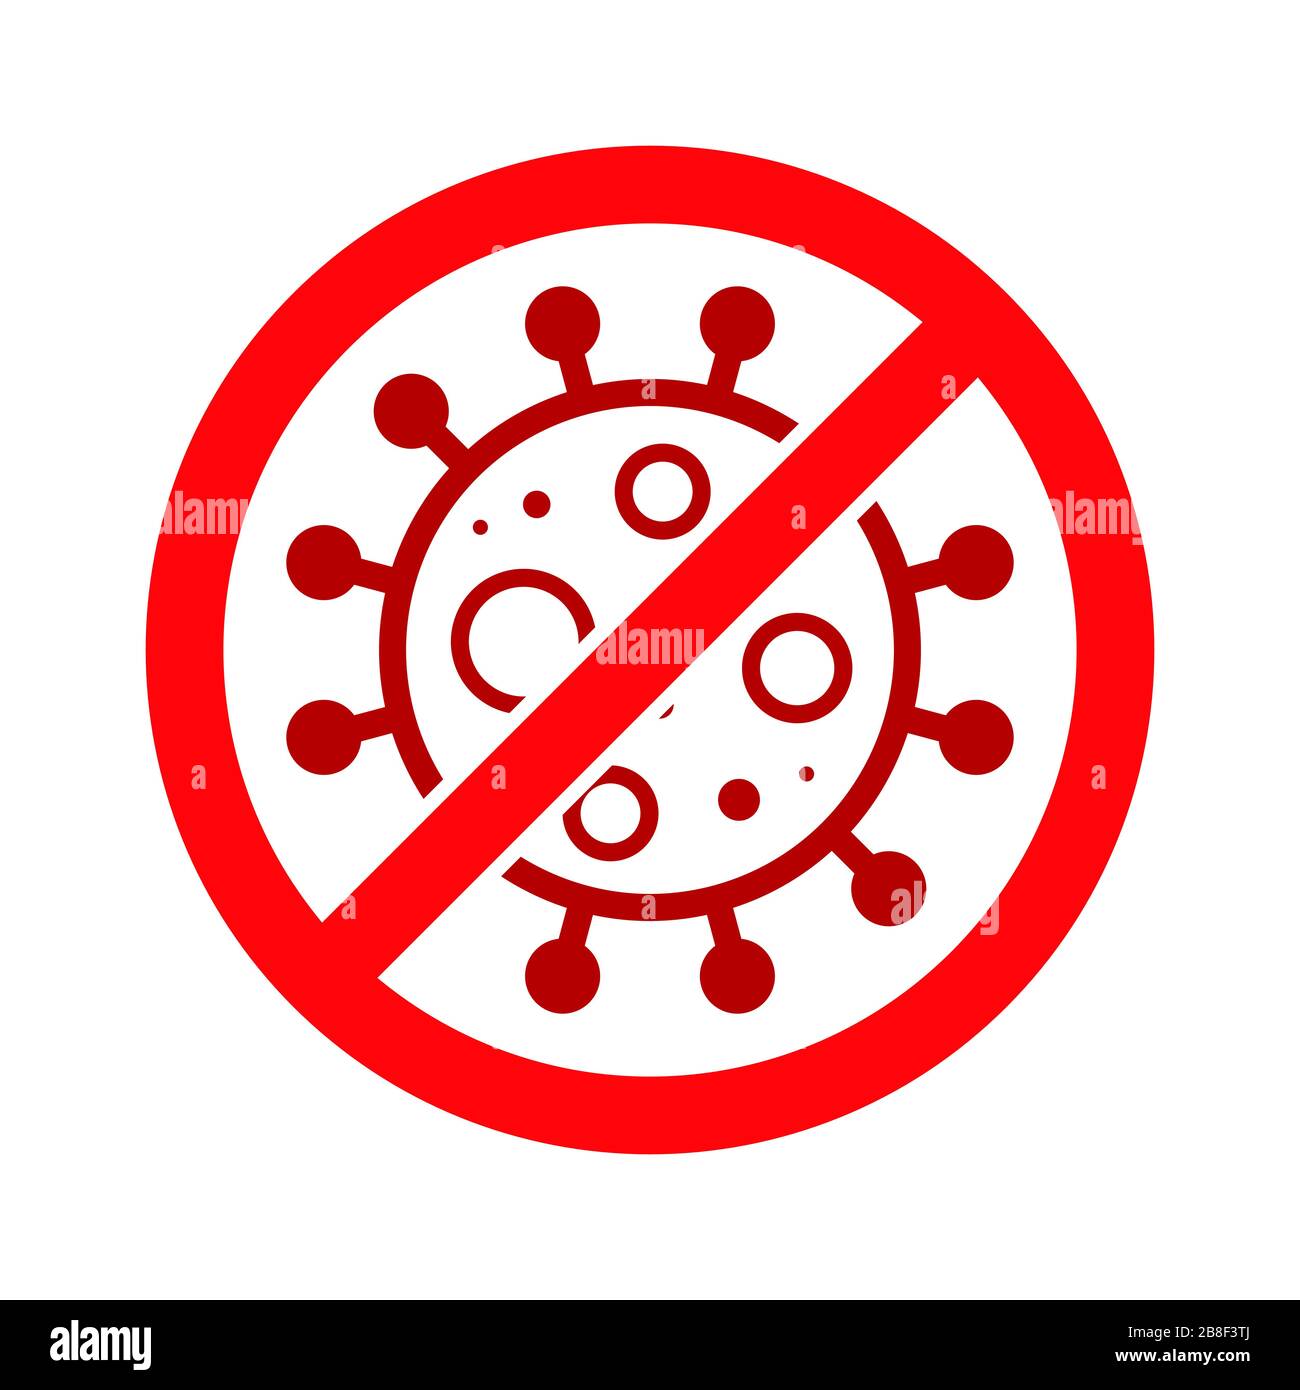 Wuhan Corona virus, Covid-19, nCOV, MERS-COV Novel Coronavirus Stop, Block, Anti Stamp. Vecteur rouge 2019-2020. Avertissement, symbole de protection. Code 19 Illustration de Vecteur